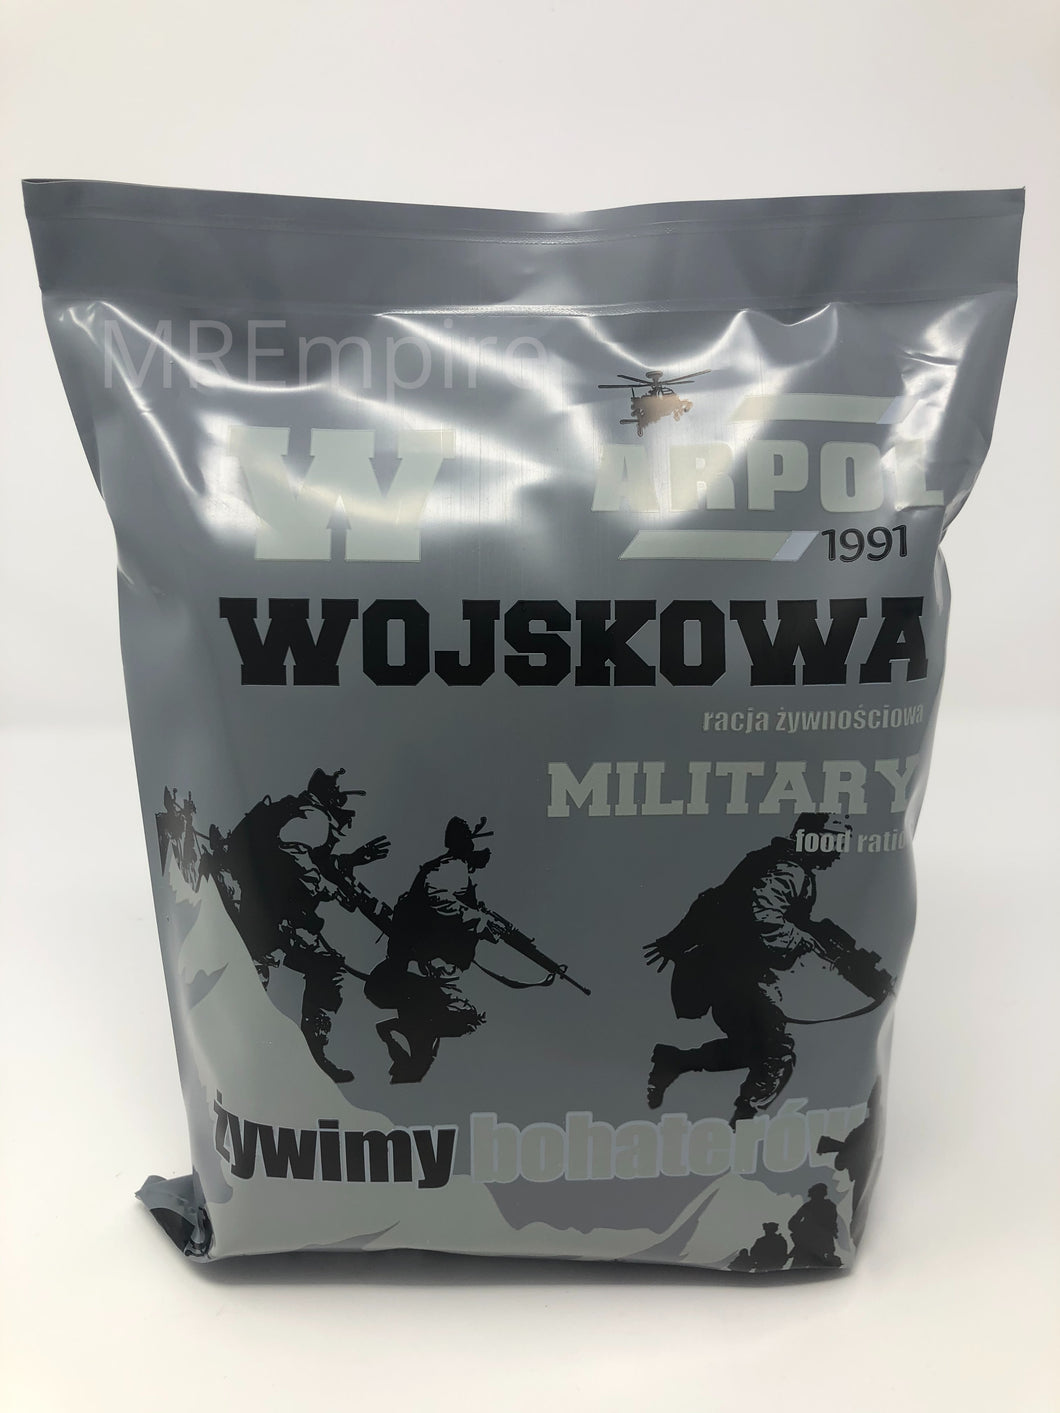 Polish 'Military' food ration - WZ by ARPOL